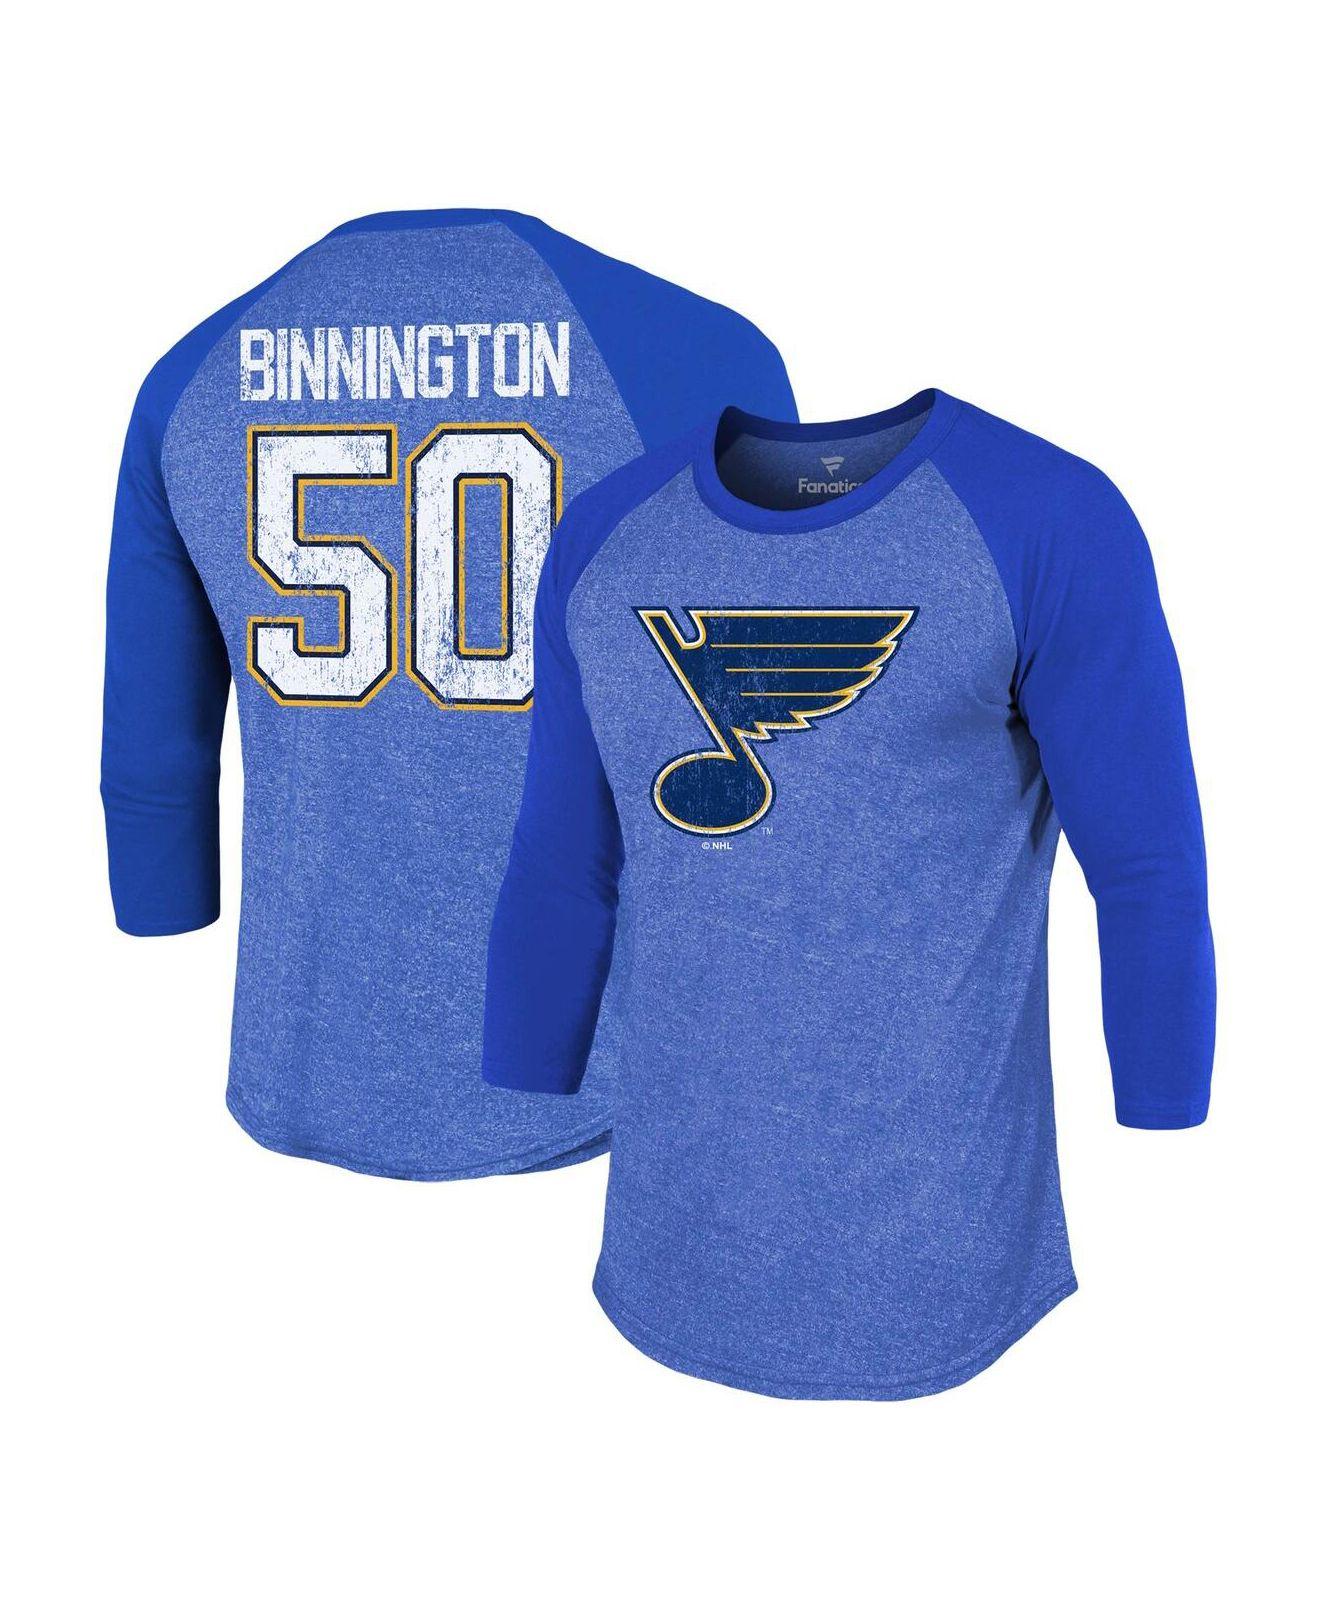 Fanatics Branded Jordan Binnington Blue St. Louis Blues Name And